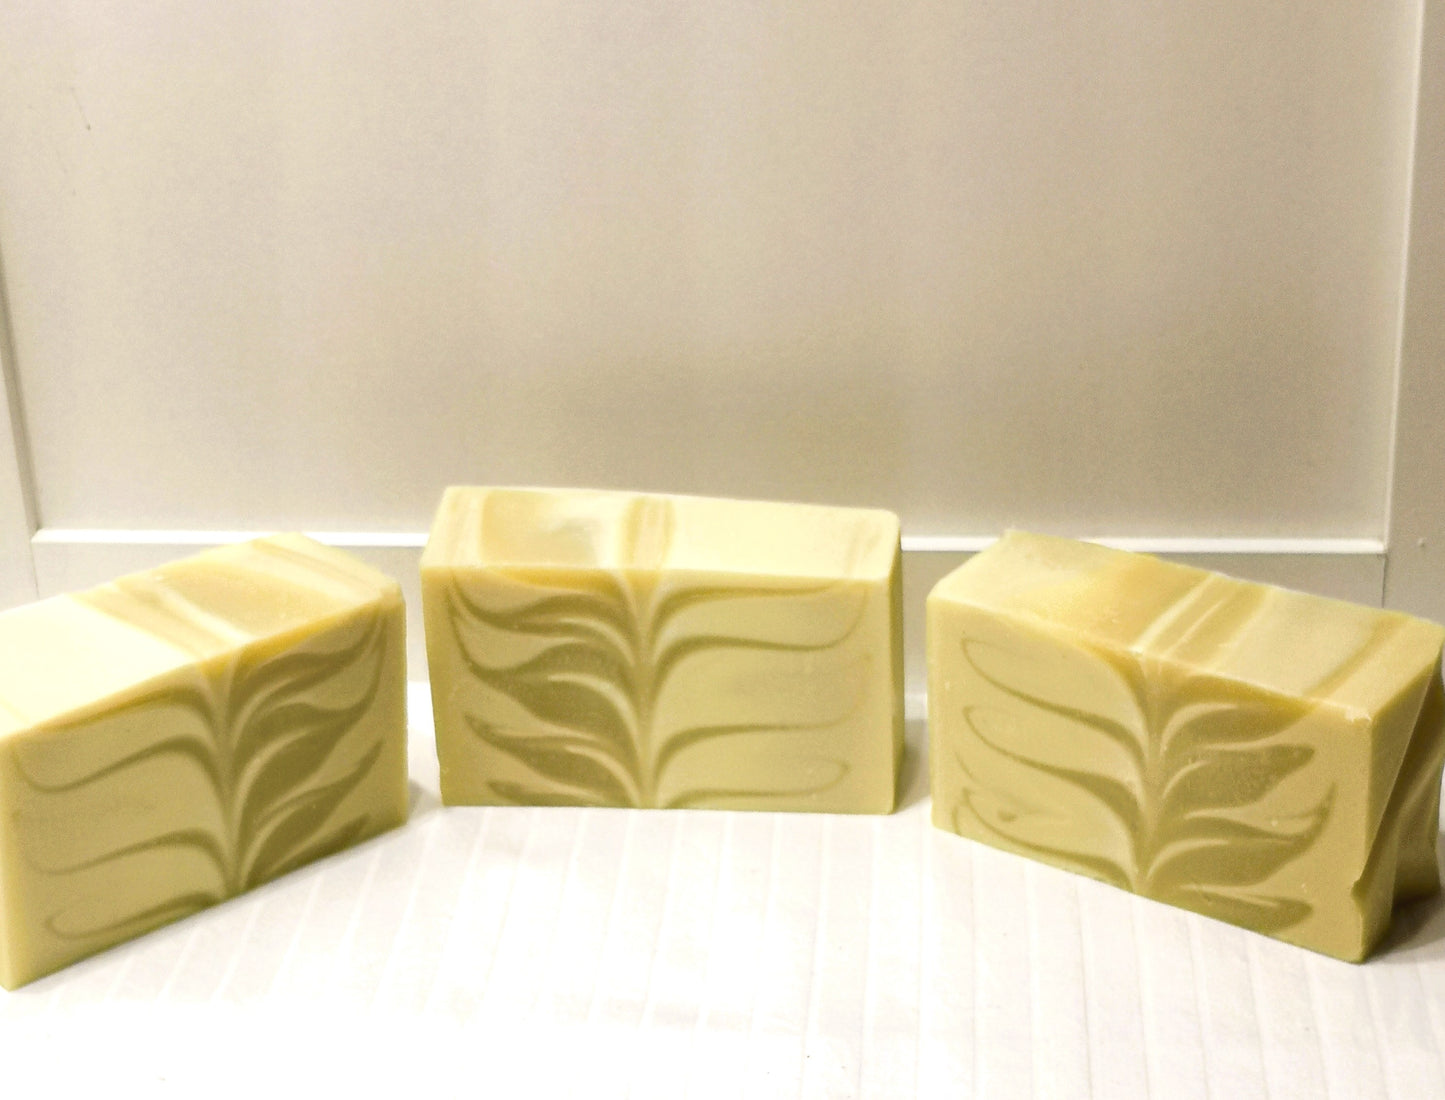 three bars of natural soap with lotus design